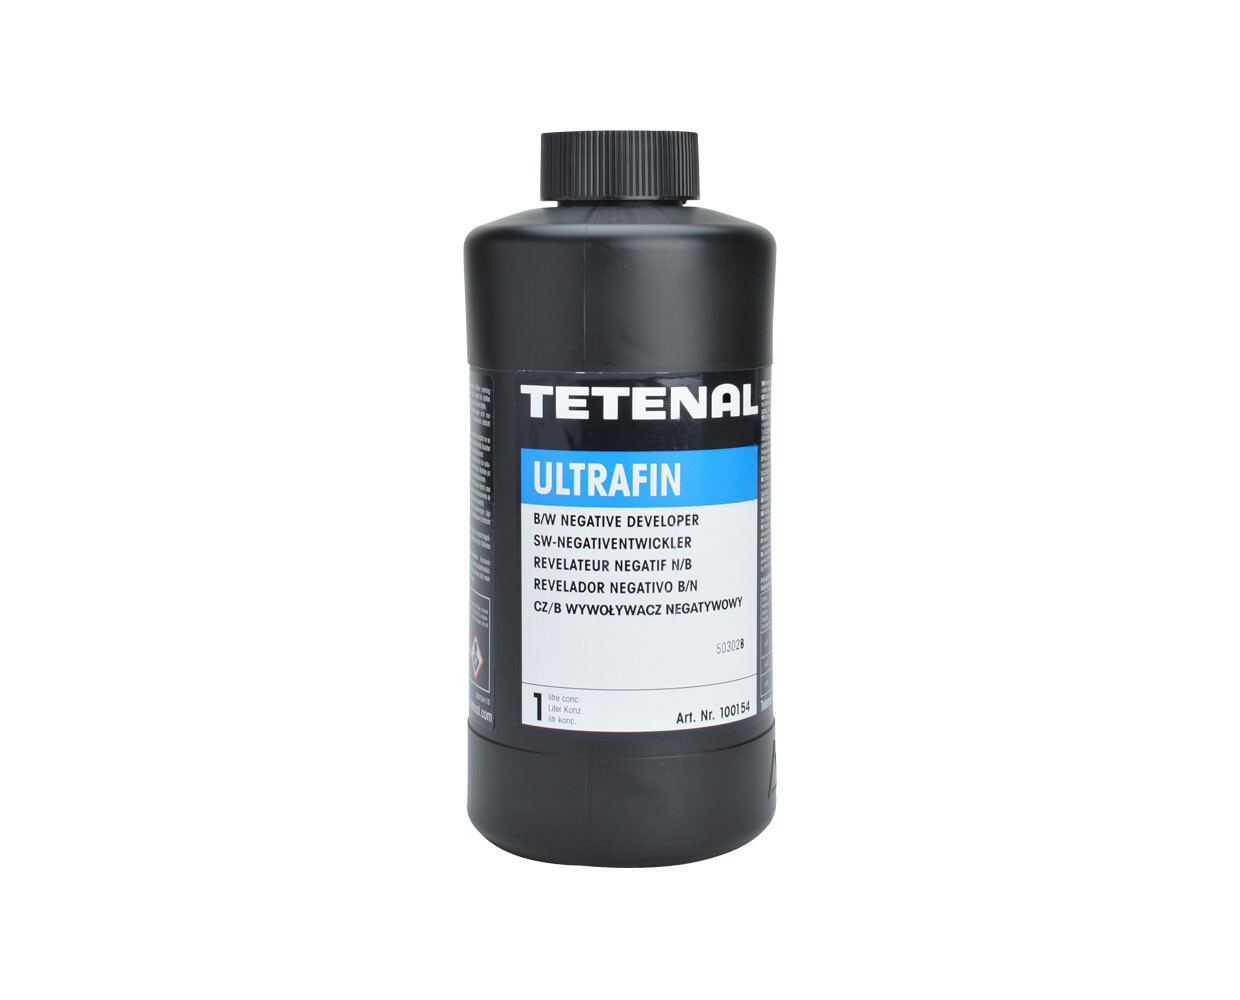 TETENAL Ultrafin liquid 1 liter SW-Negativentwickler 100154